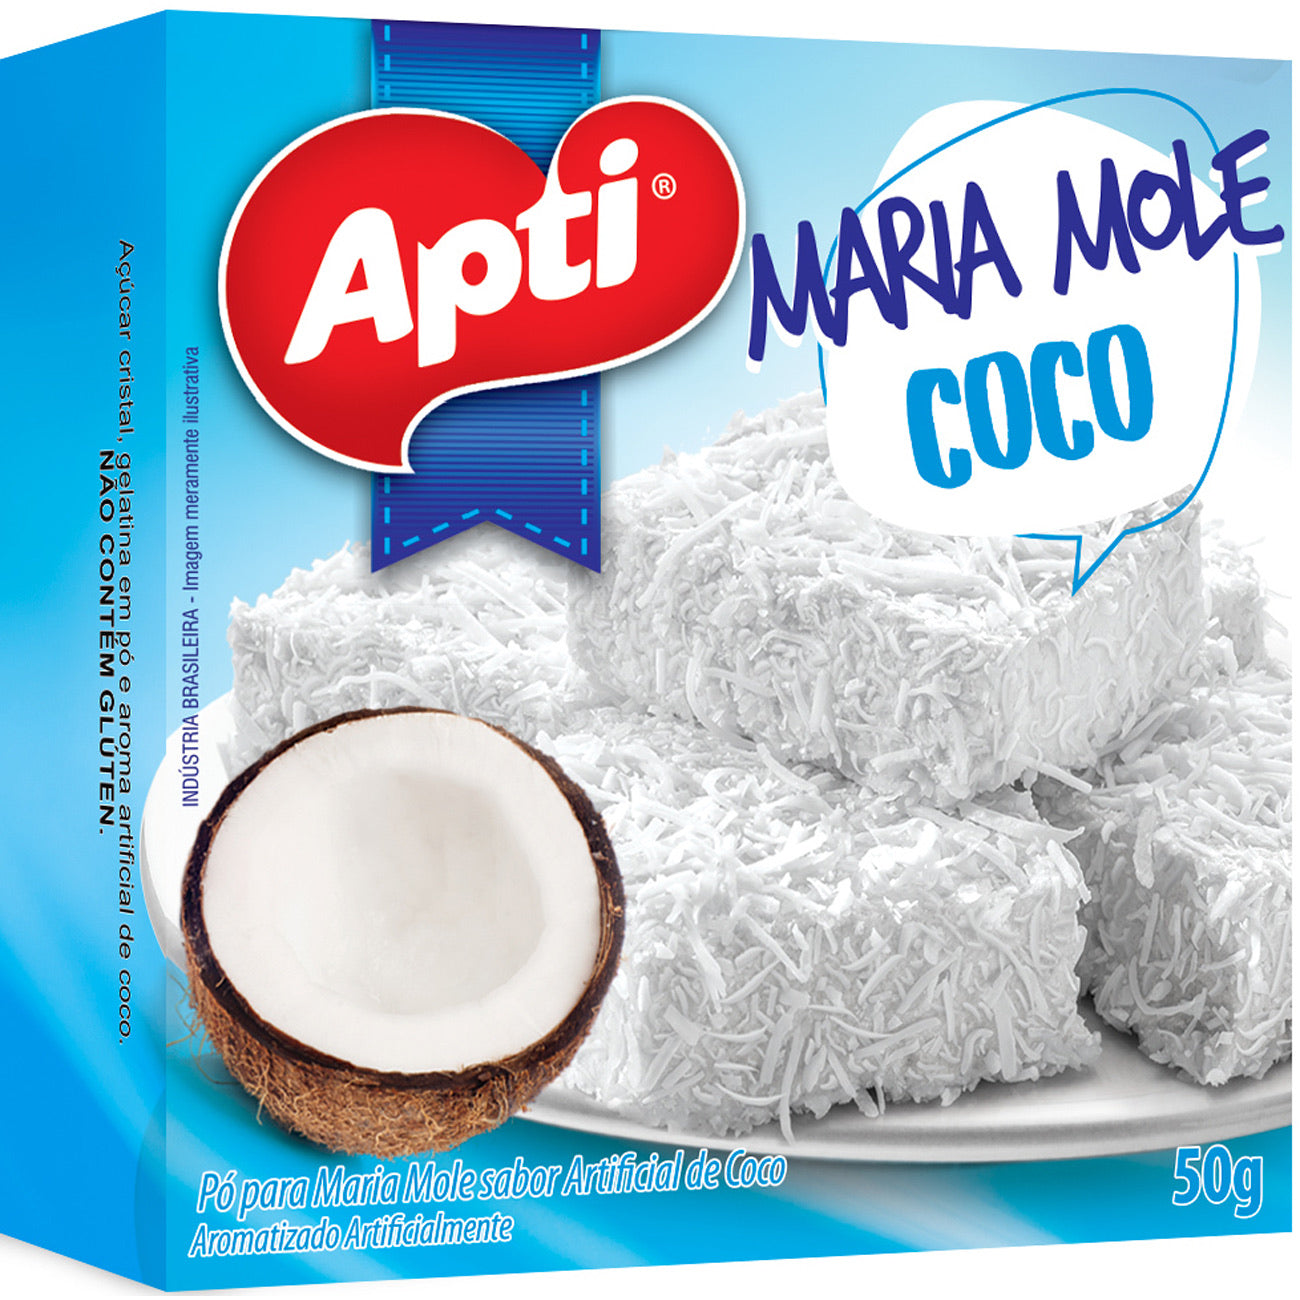 Apti Maria Mole Coconut Candy Mix 50g